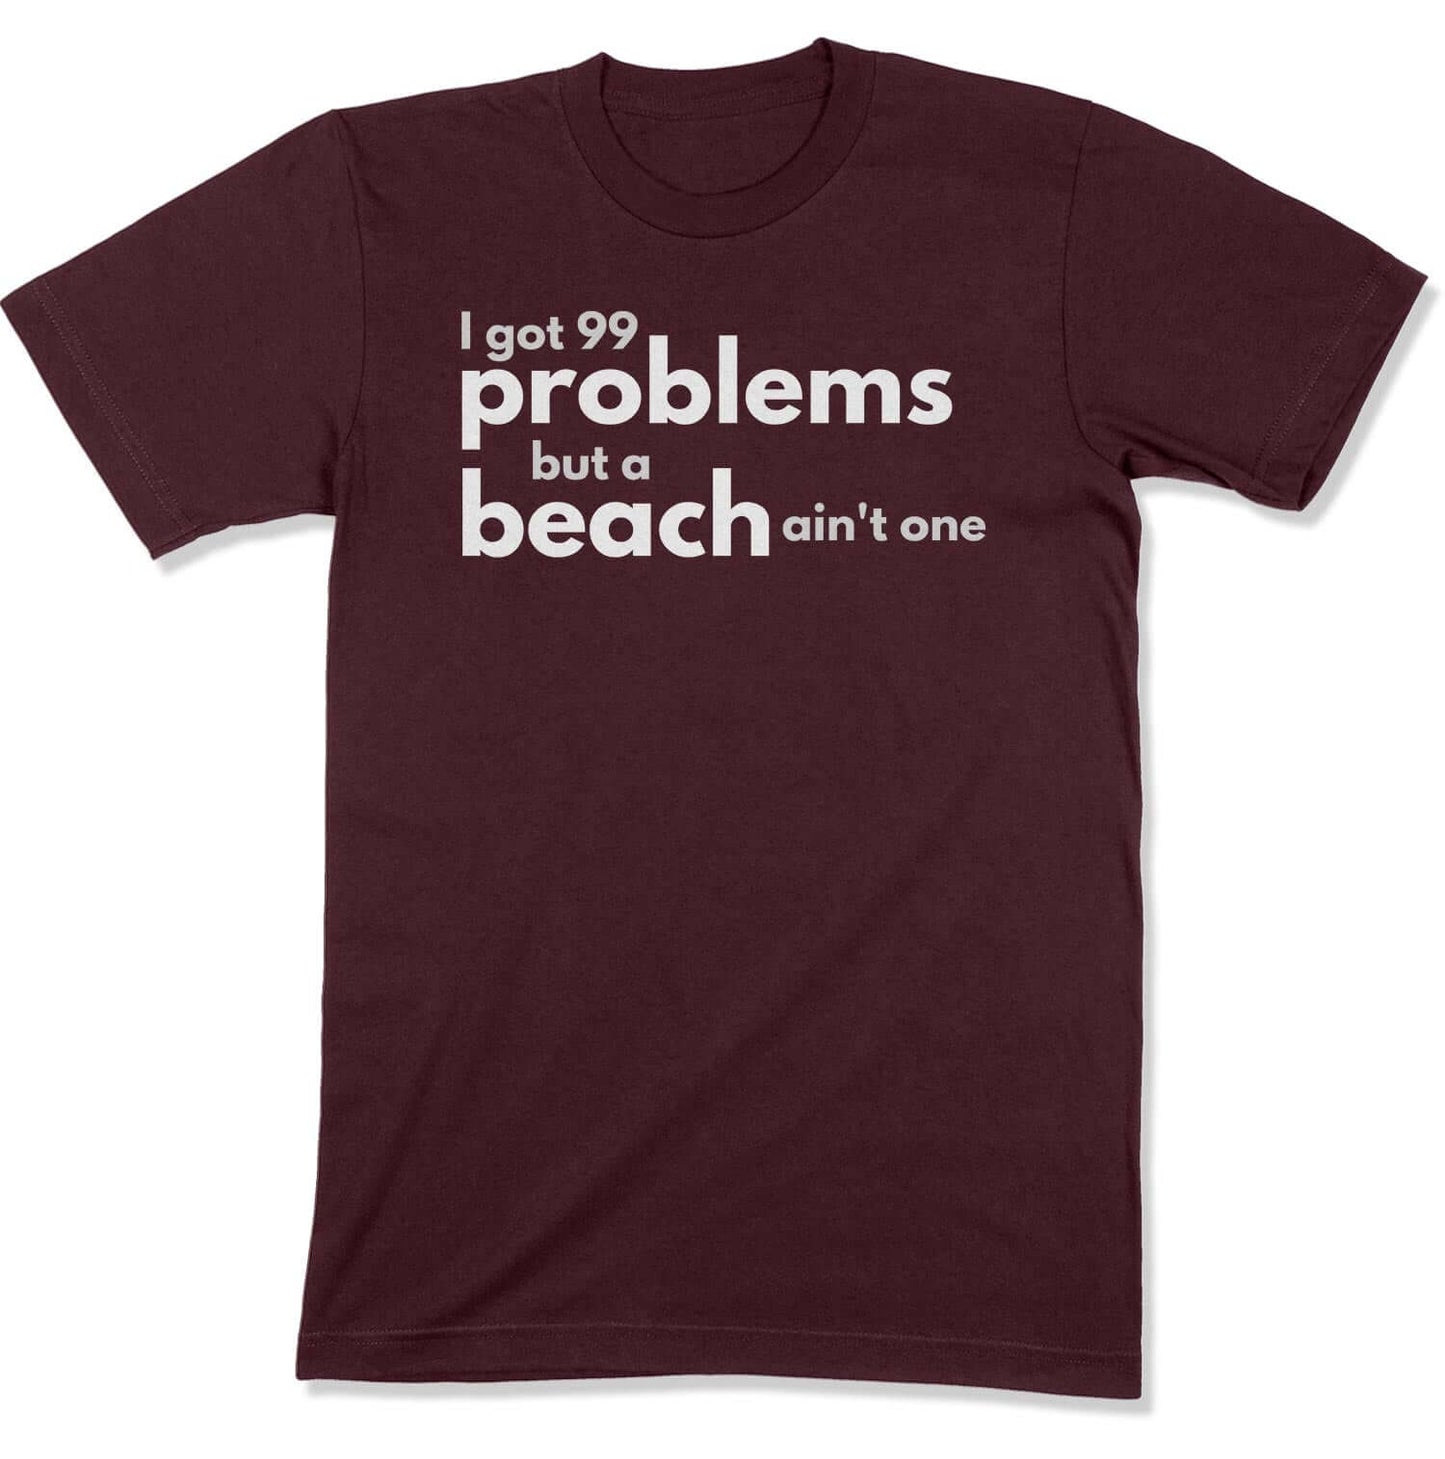 99 Problems Unisex T-Shirt in Color: Maroon - East Coast AF Apparel